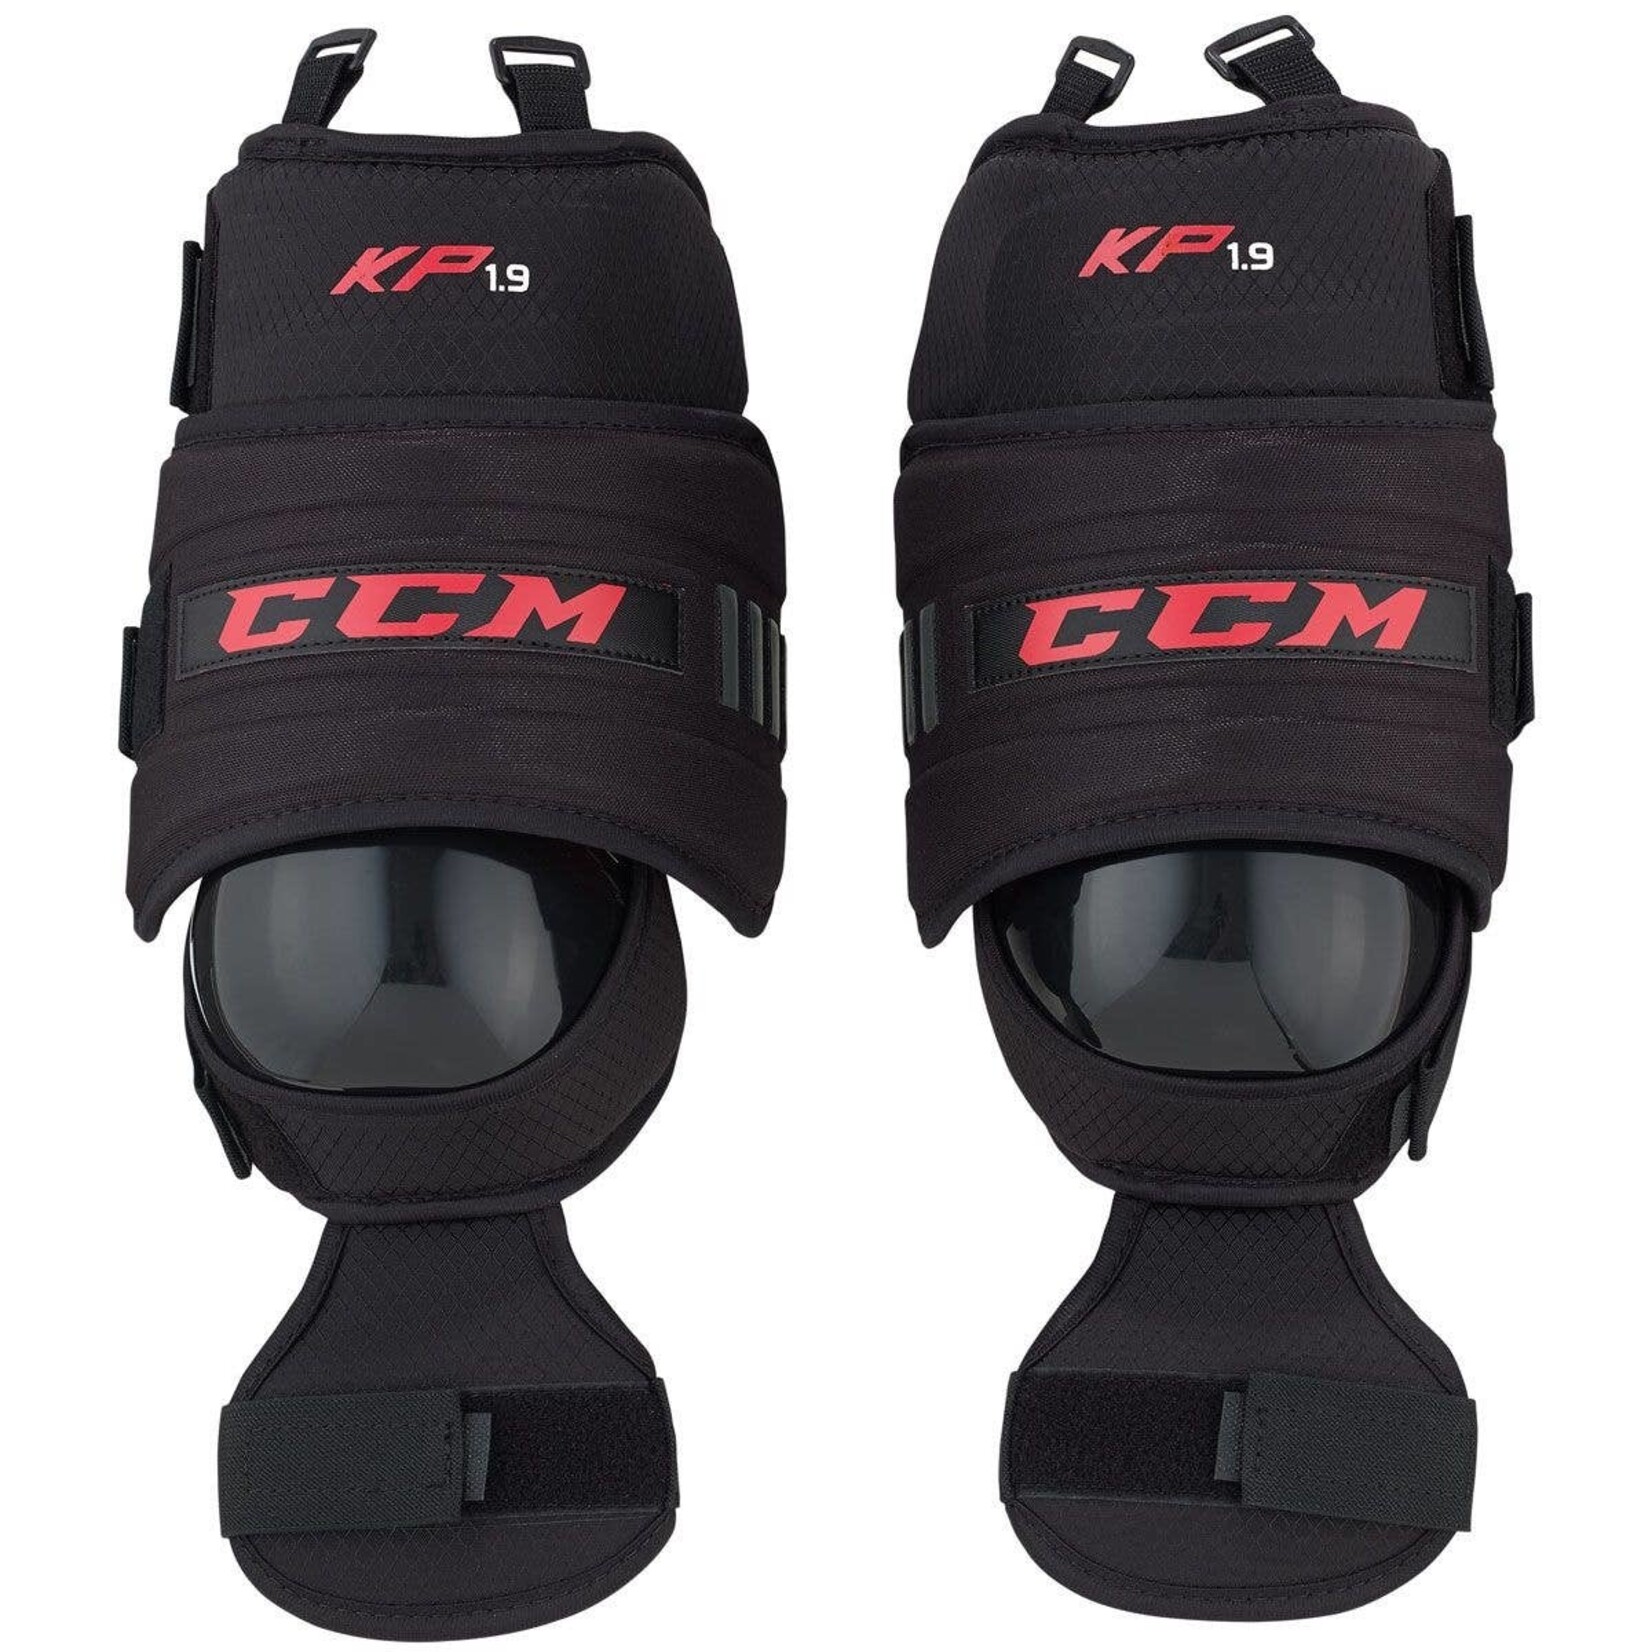 CCM CCM Goal Knee Protector, 1.9, Intermediate